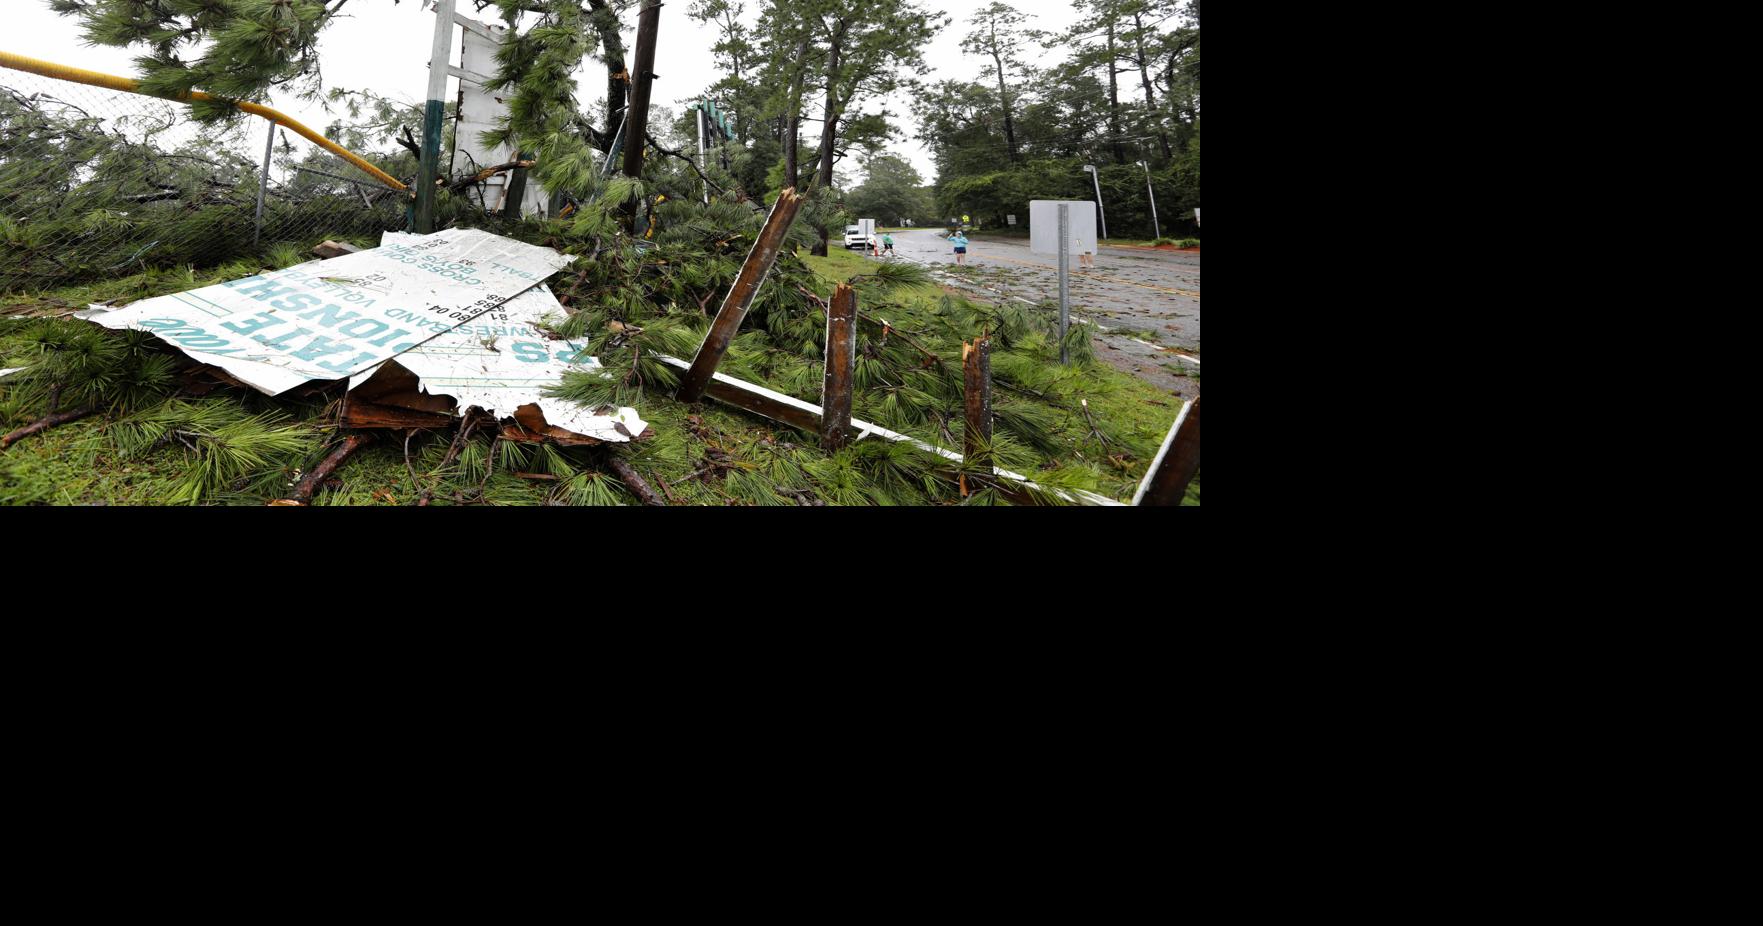 Dorian cuts off North Carolina community following its US landfall